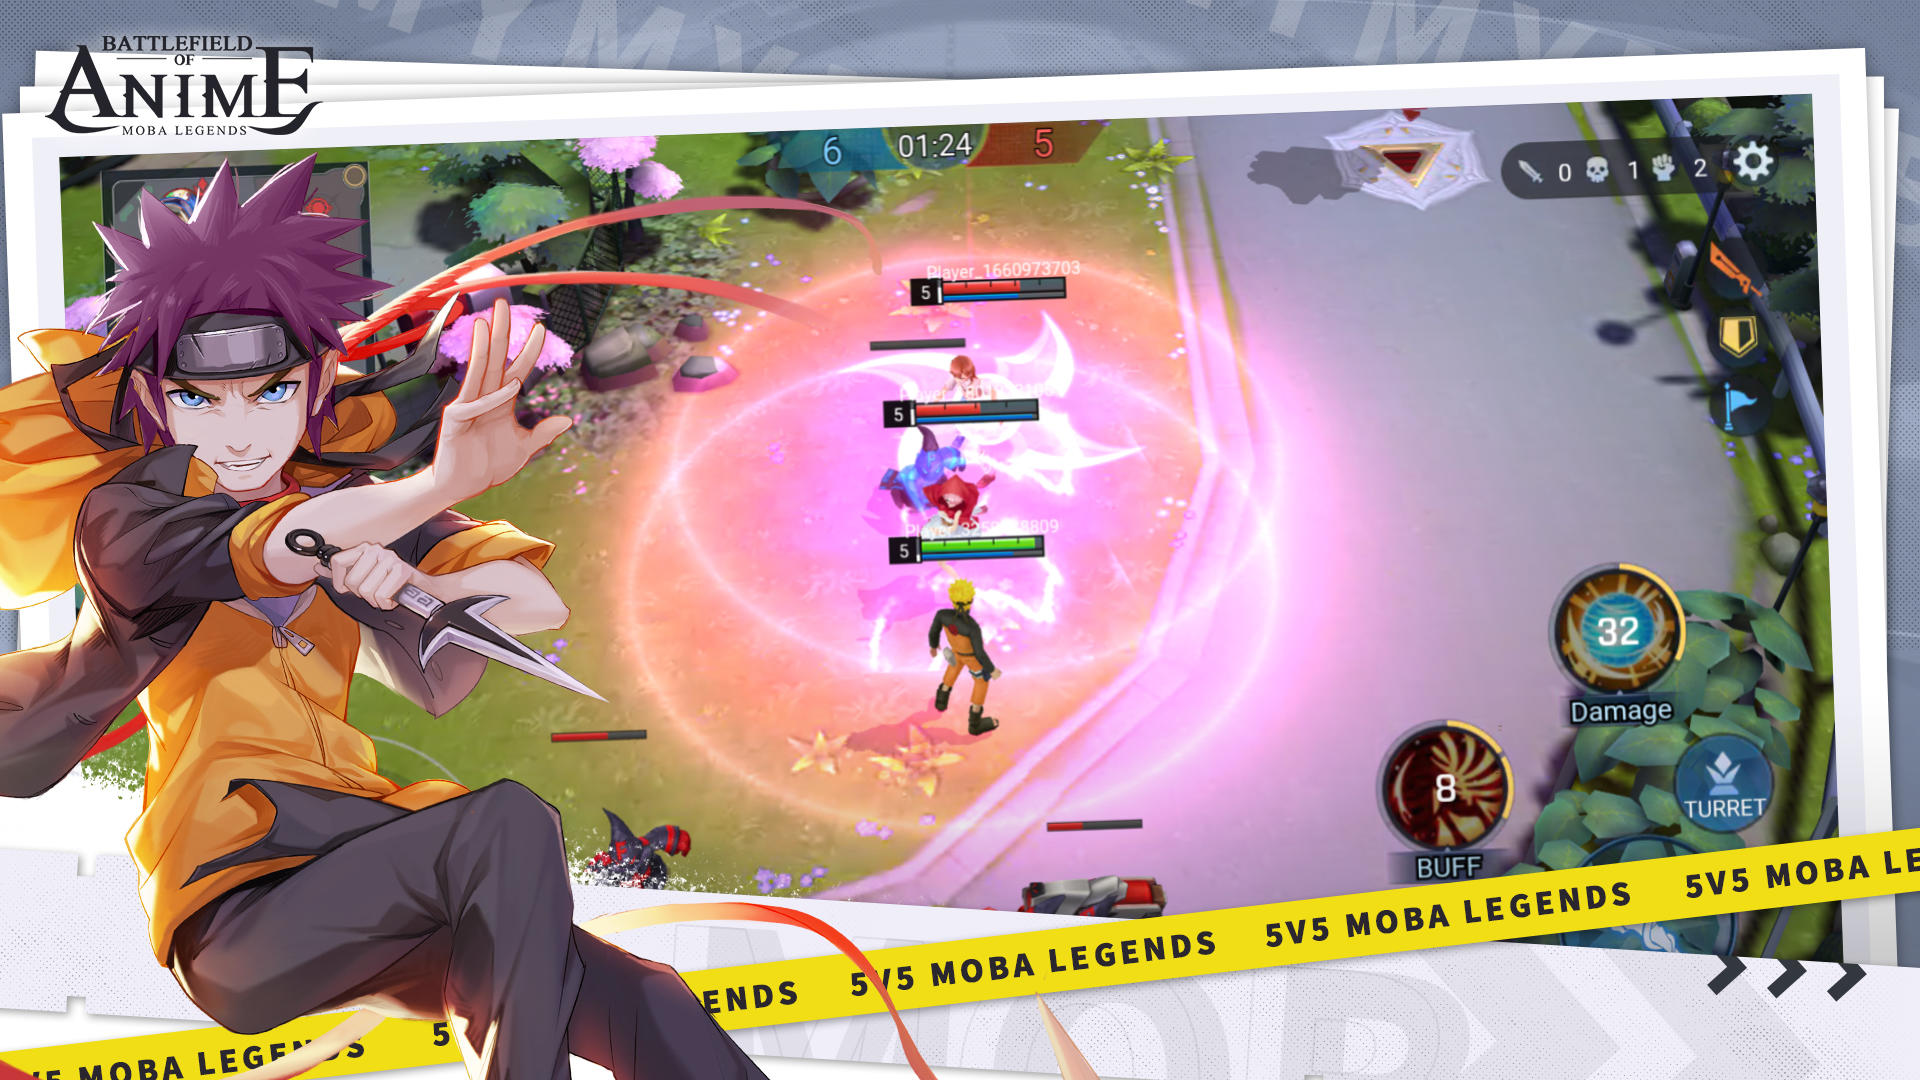 Battlefield of Anime screenshot game